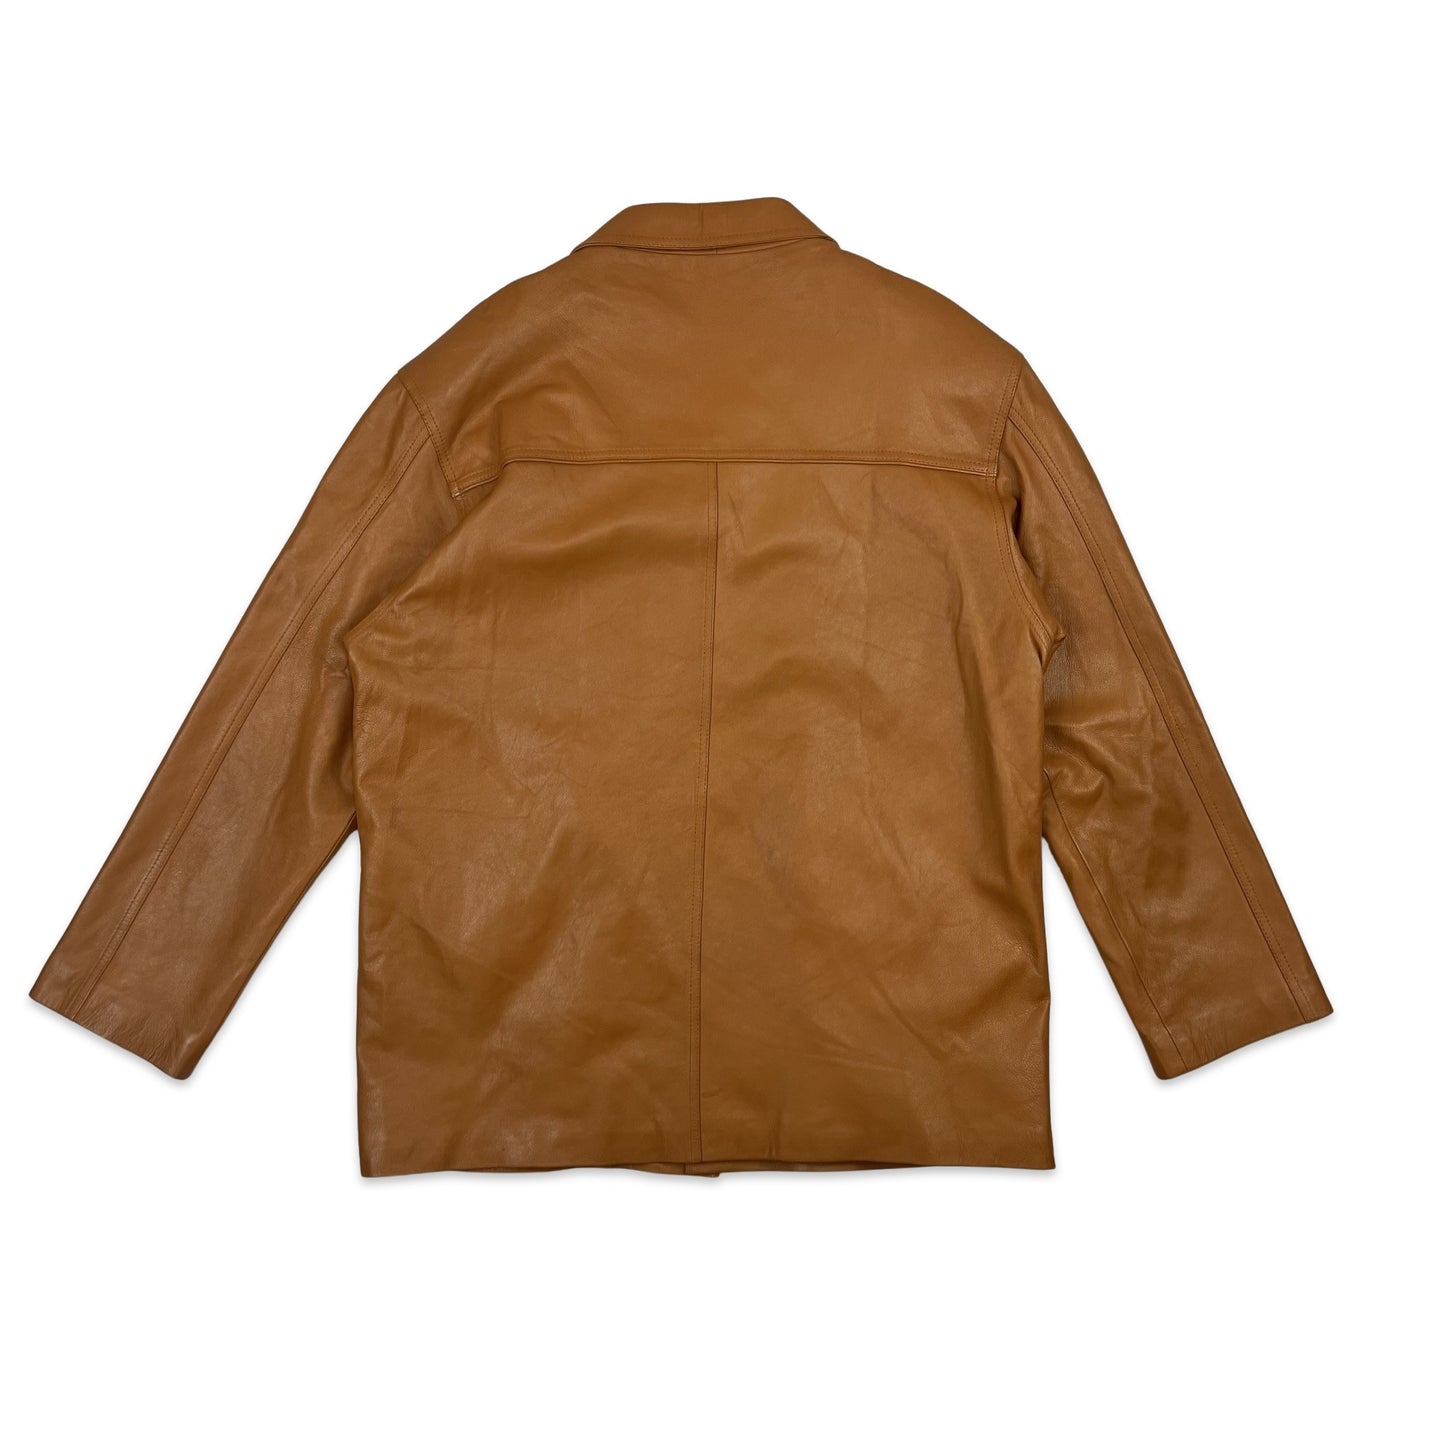 Vintage 90s Leather Jacket Tan M L